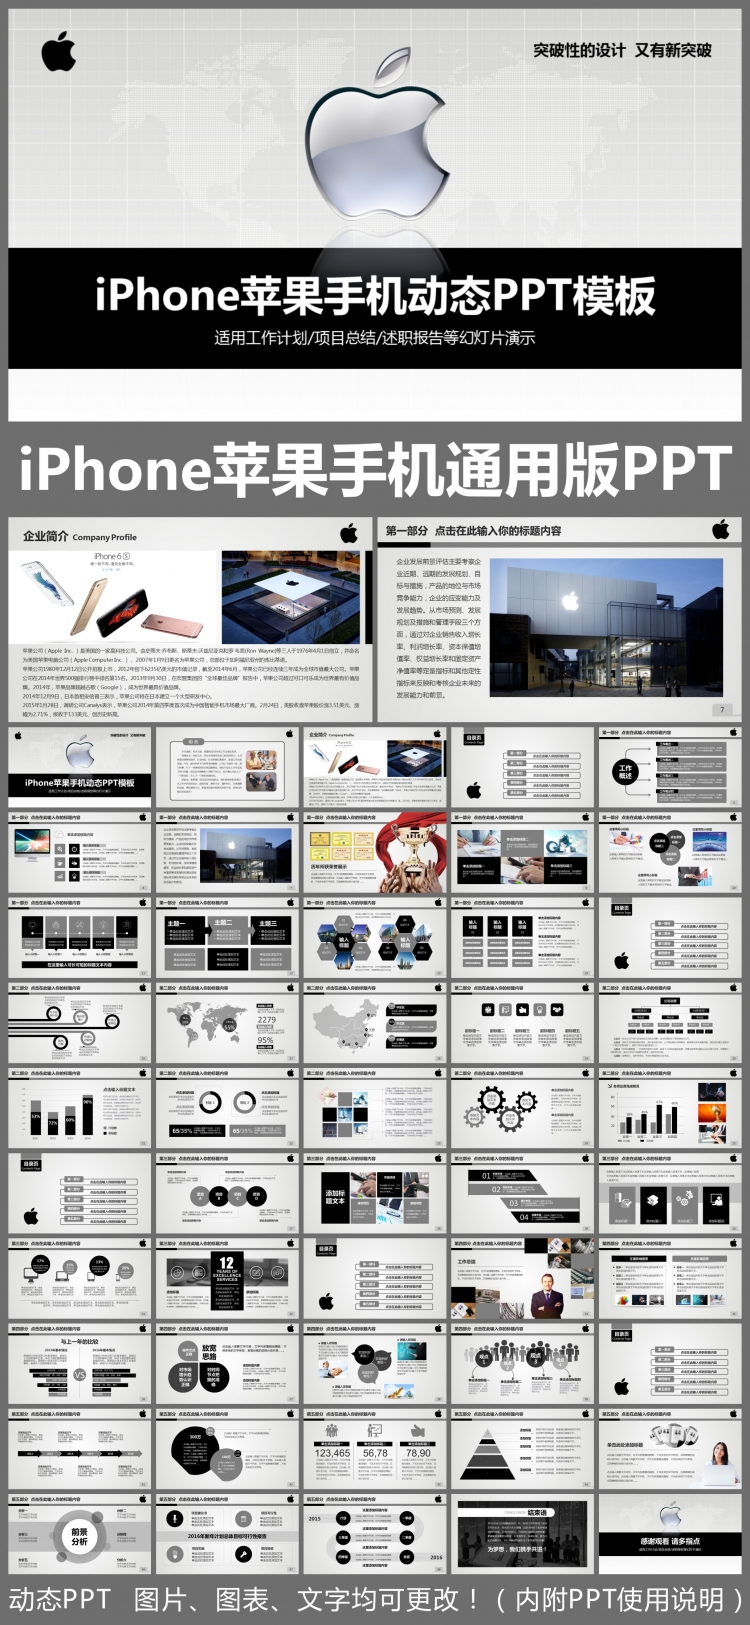 iphone苹果手机苹果公司通用版动态ppt专用模板述职报告工作总结工作